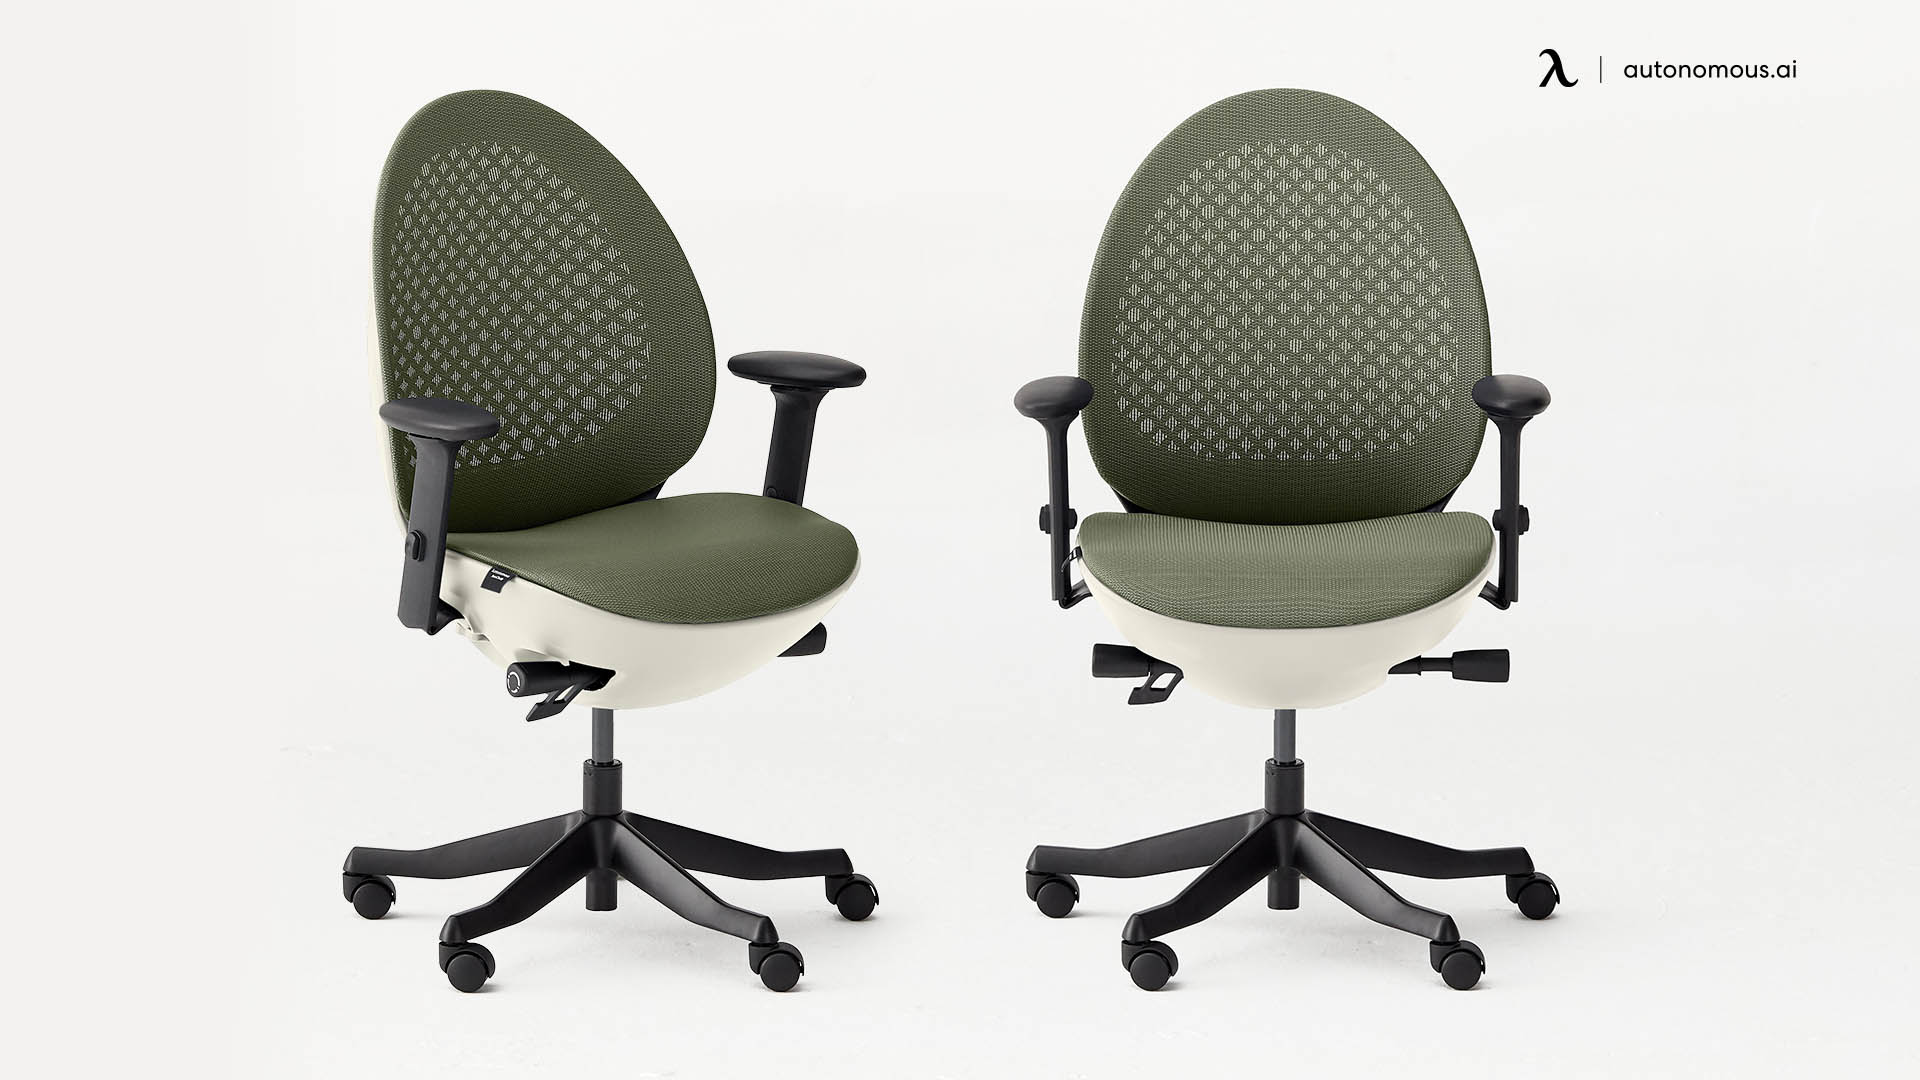 Autonomous AvoChair inexpensive office chair